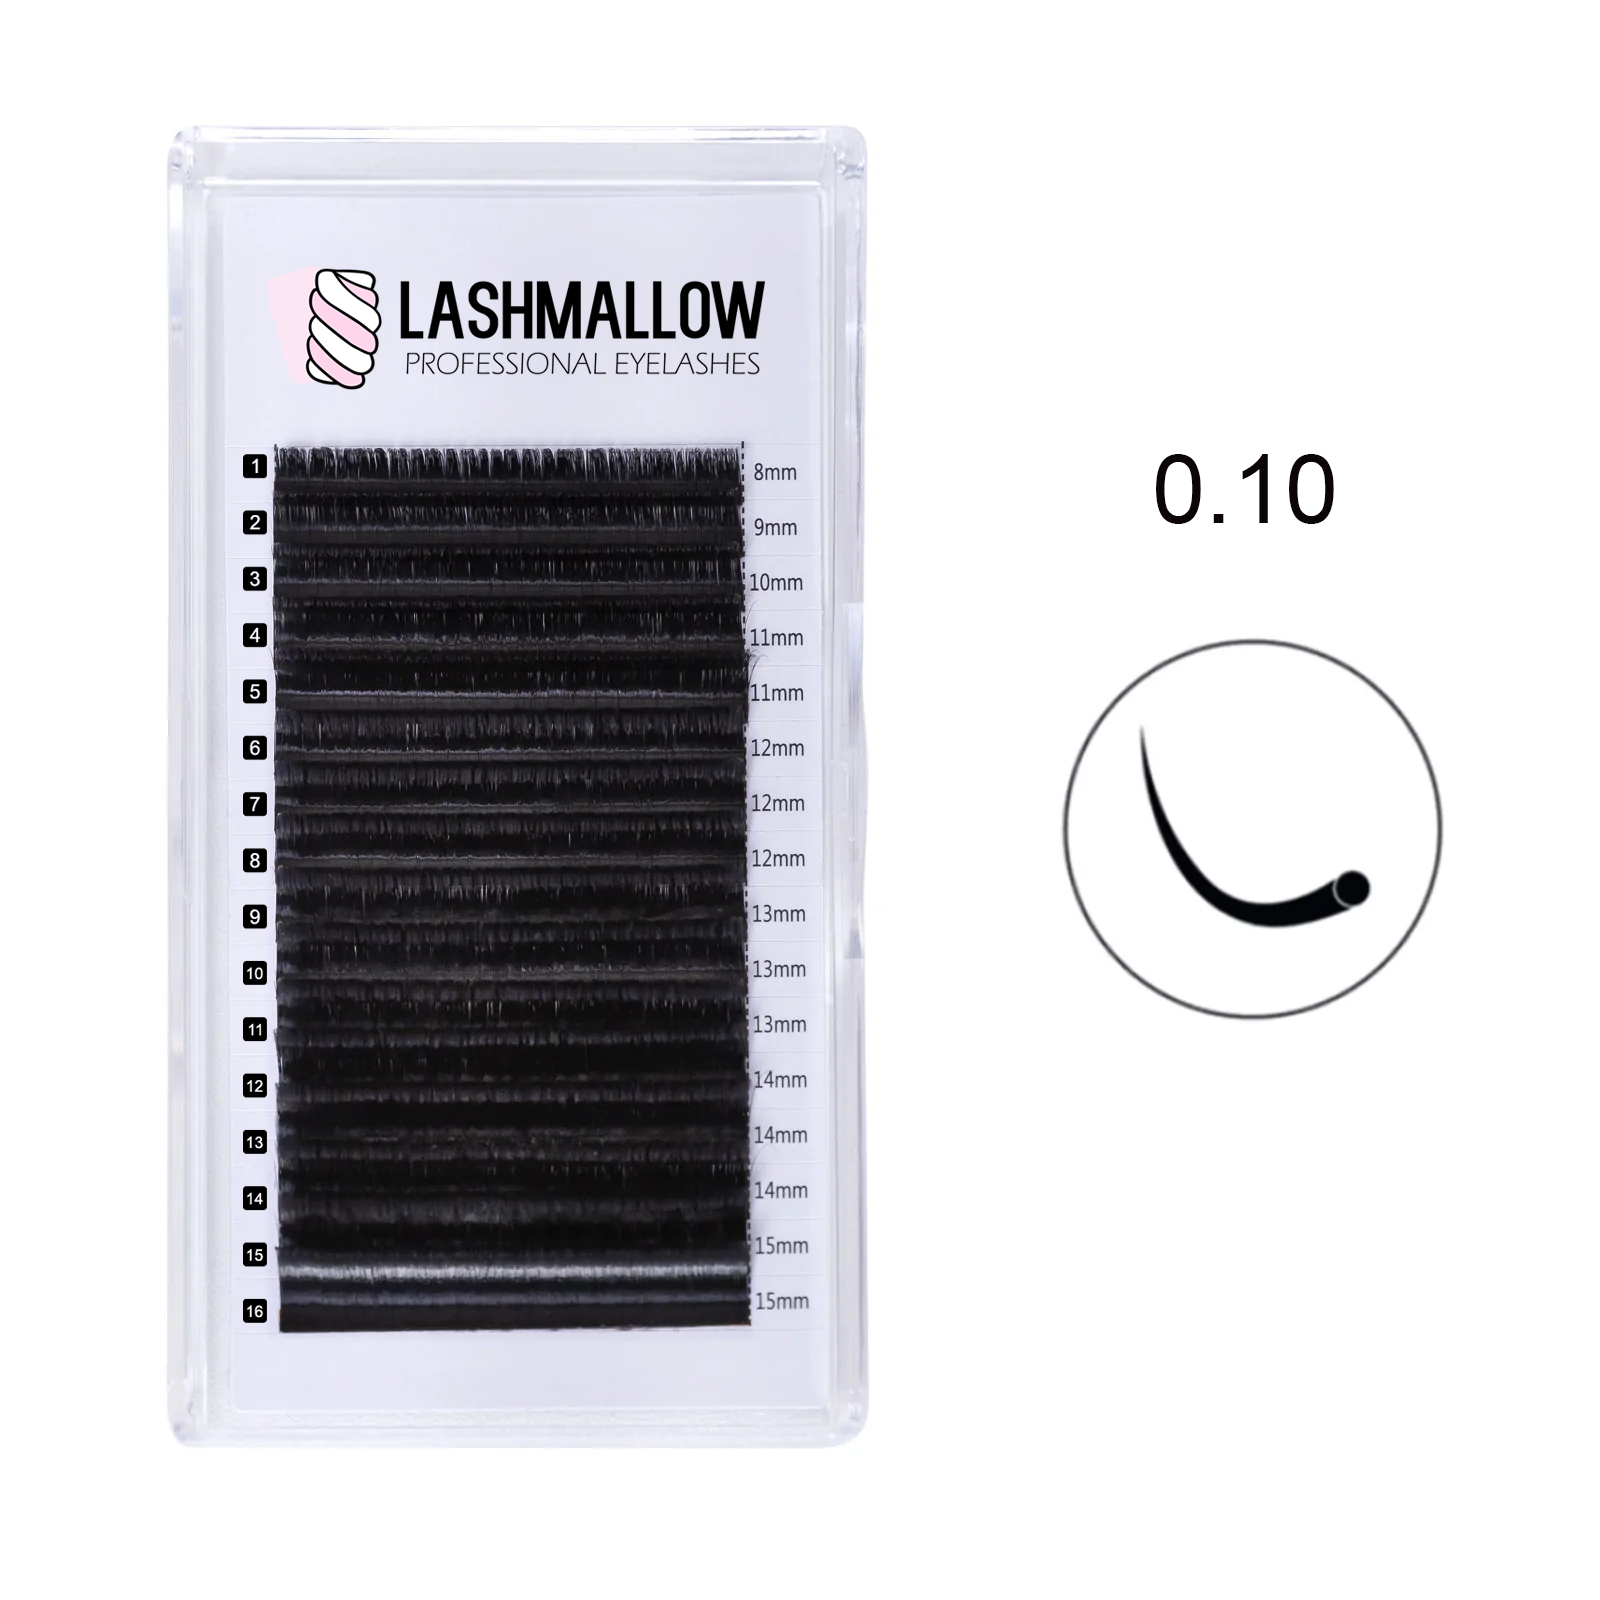 0.10 Premium Individual Classic Lashes 8-16mm Eyelash Extension Trays